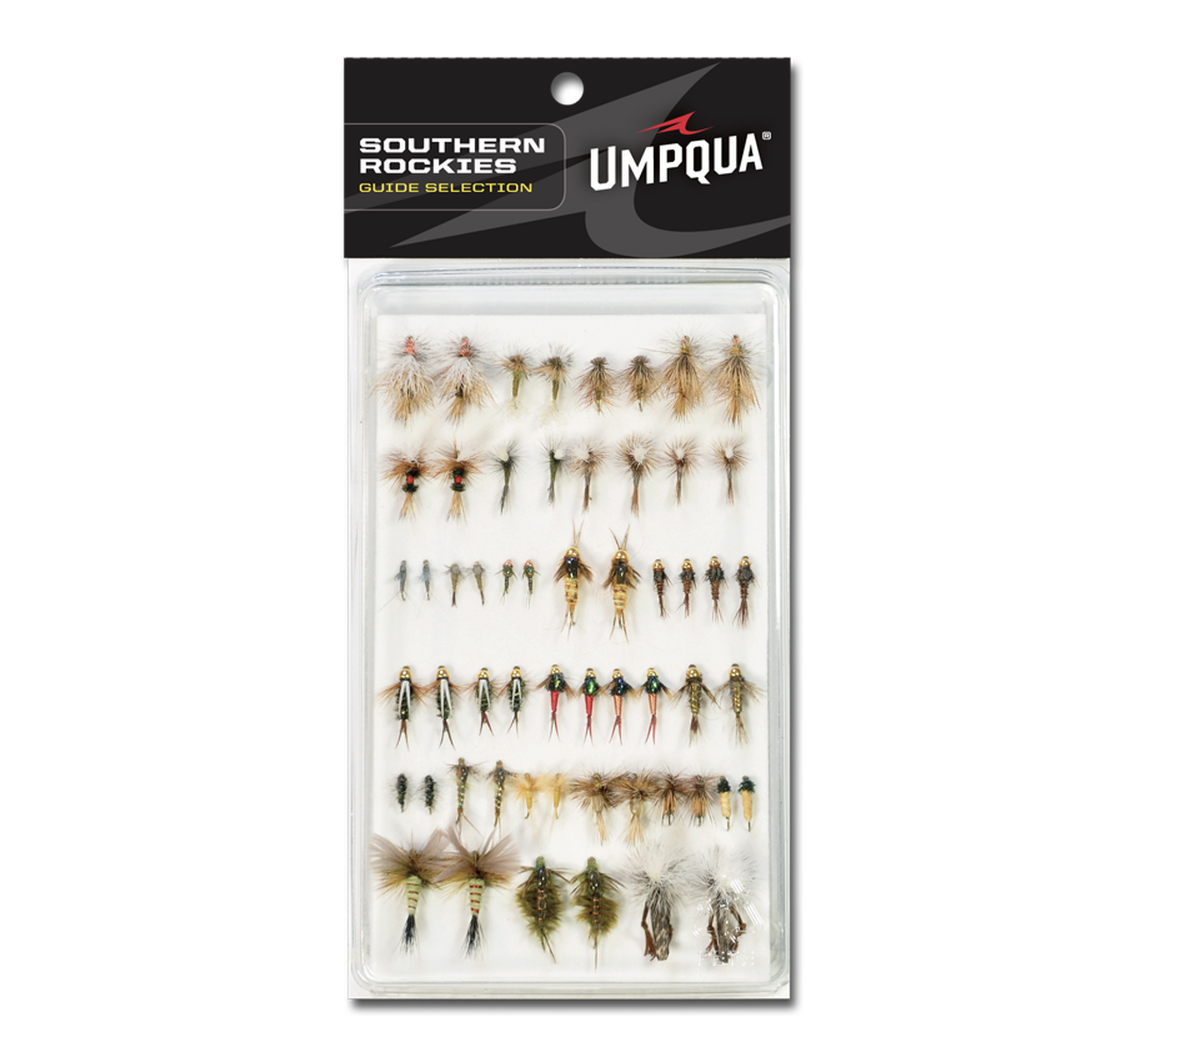 Umpqua Southern Rockies Guide Fly Selection